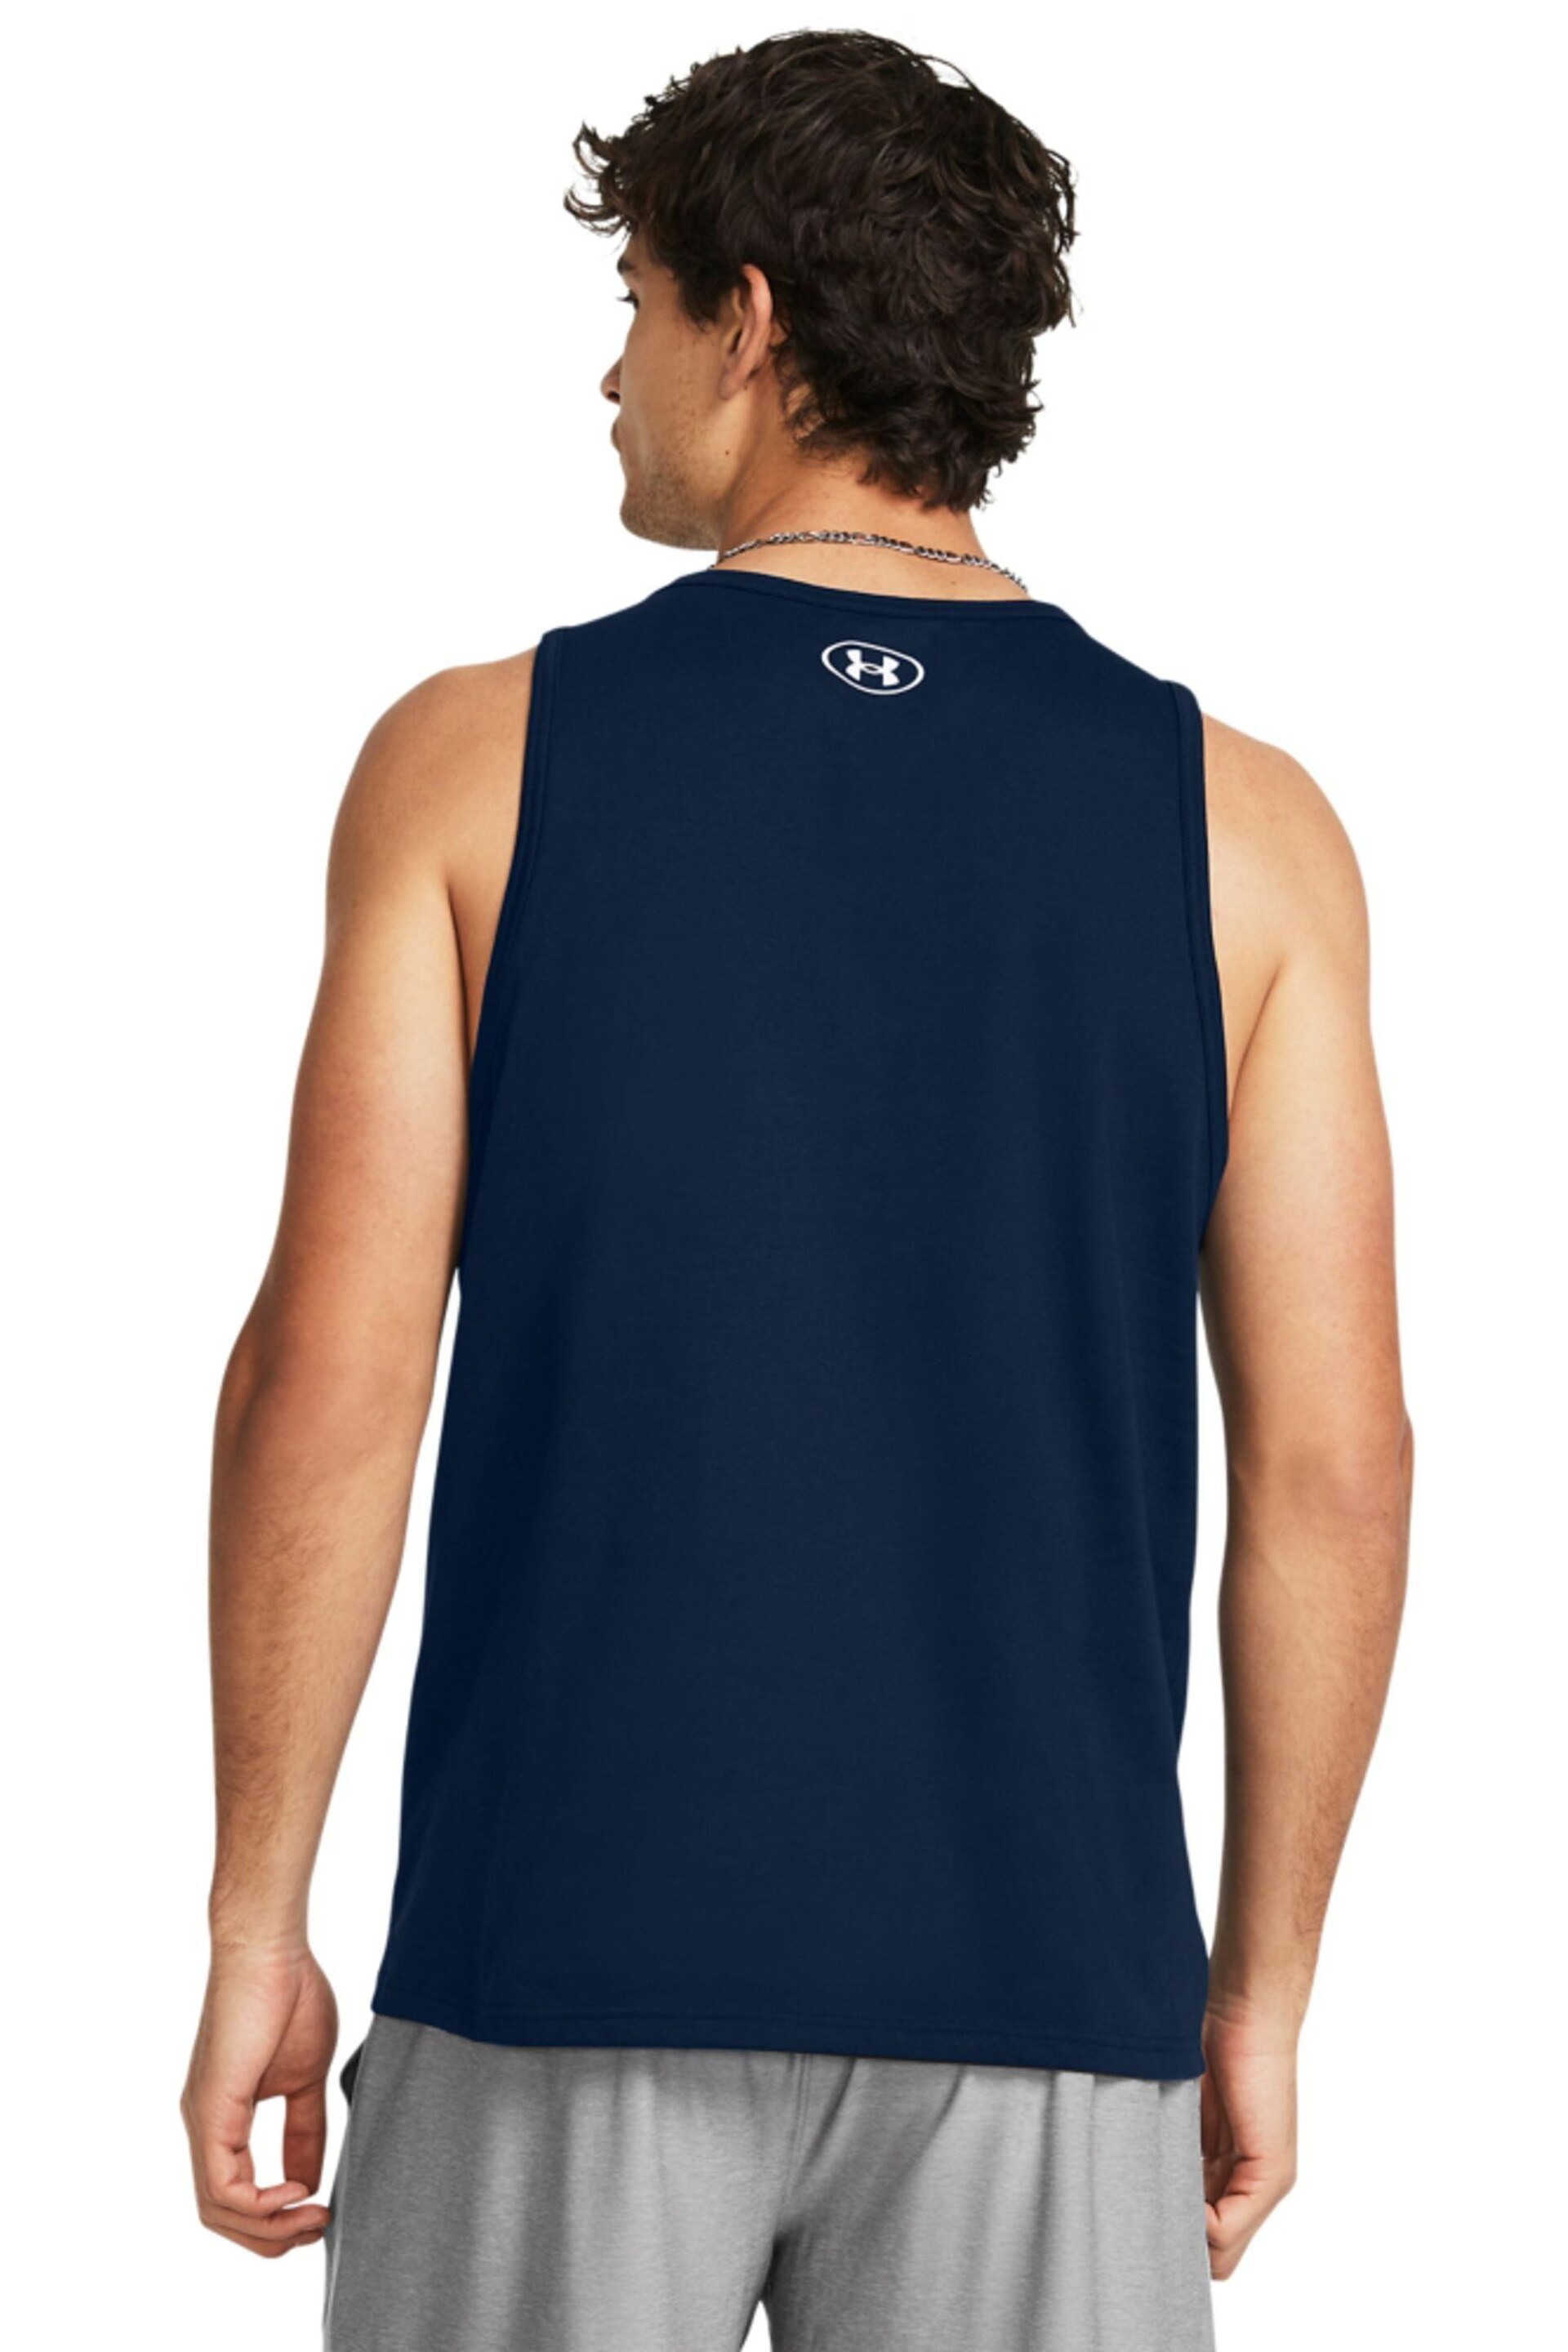 Under Armour Blue/White Sportstyle Logo Vest - Image 2 of 4